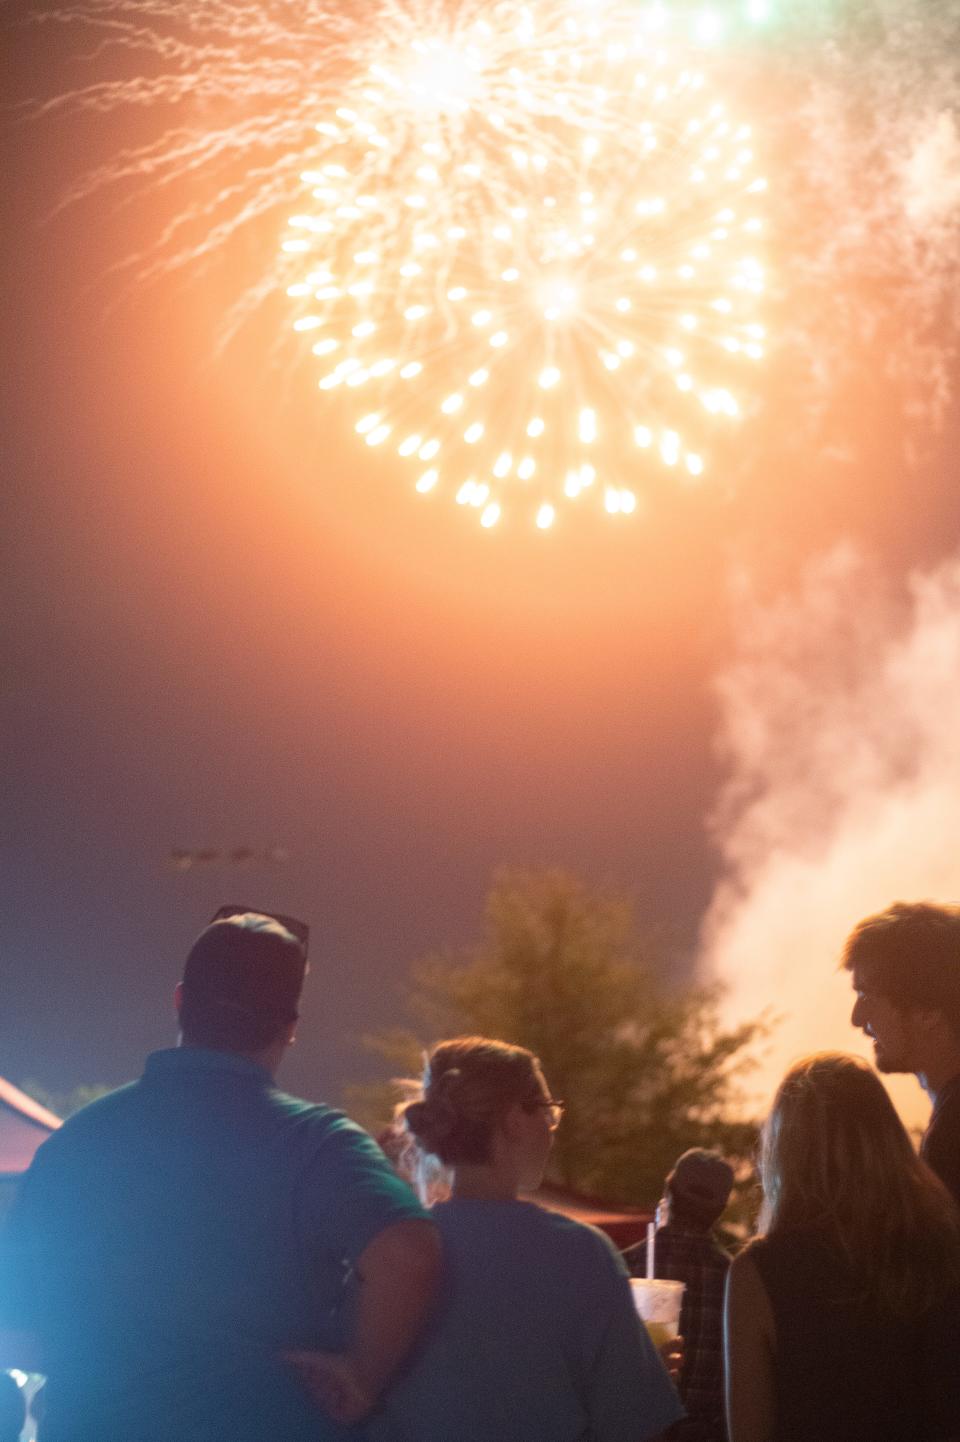 Fireworks, food, firemen’s foam Sumner County Independence Day events